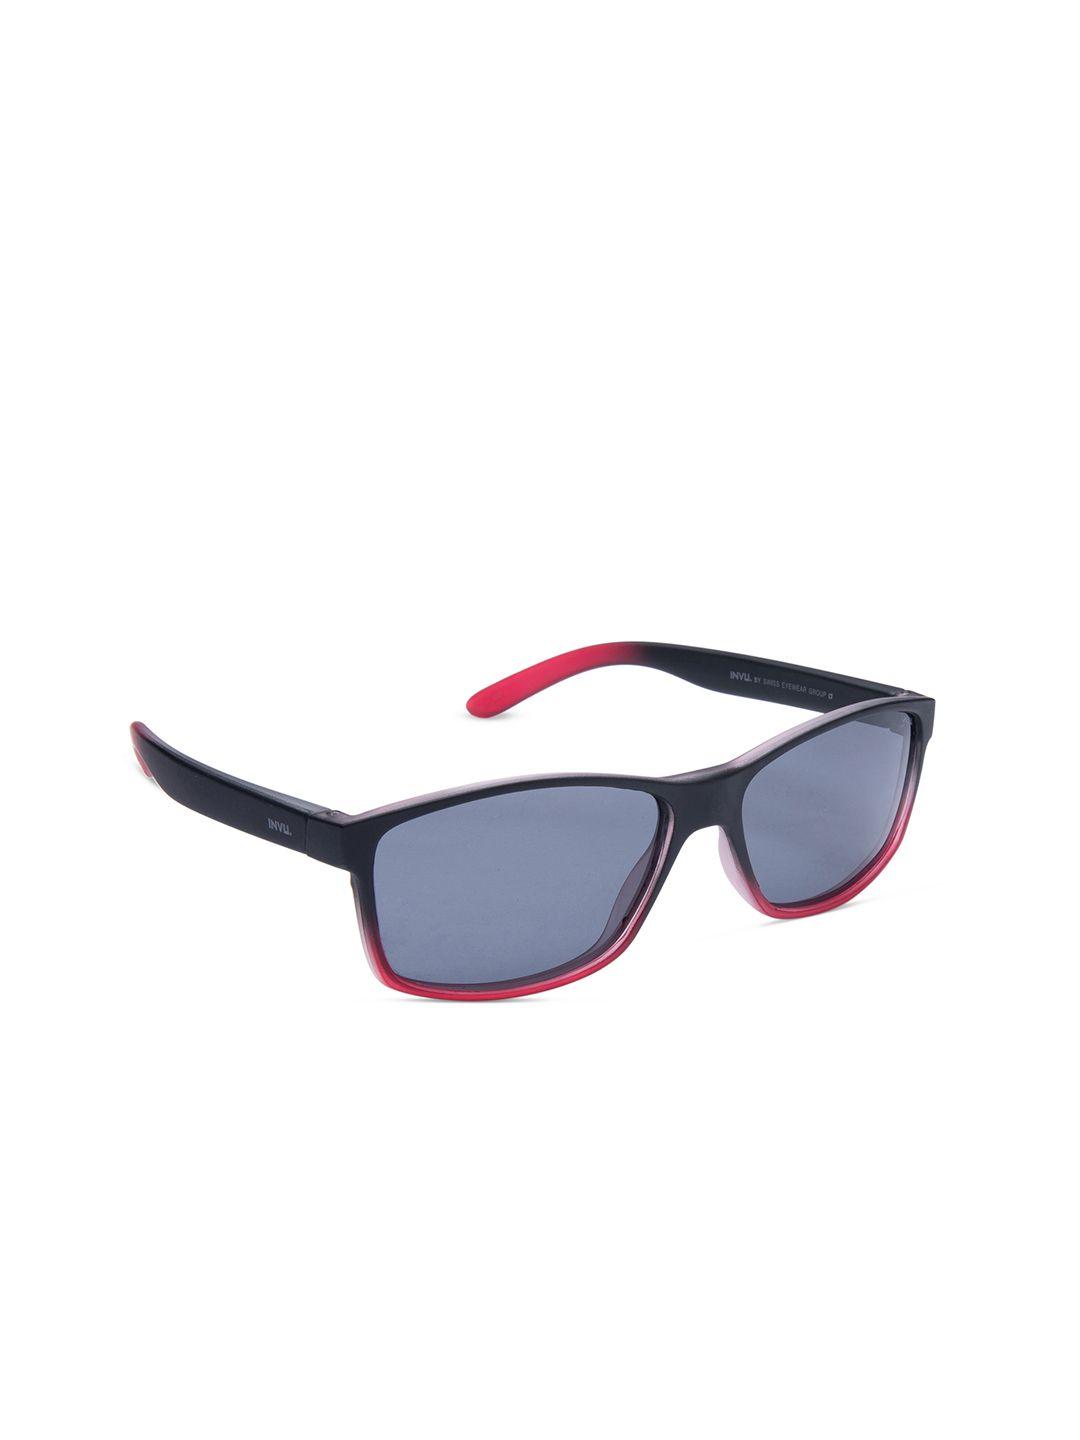 invu men rectangle sunglasses b2623c